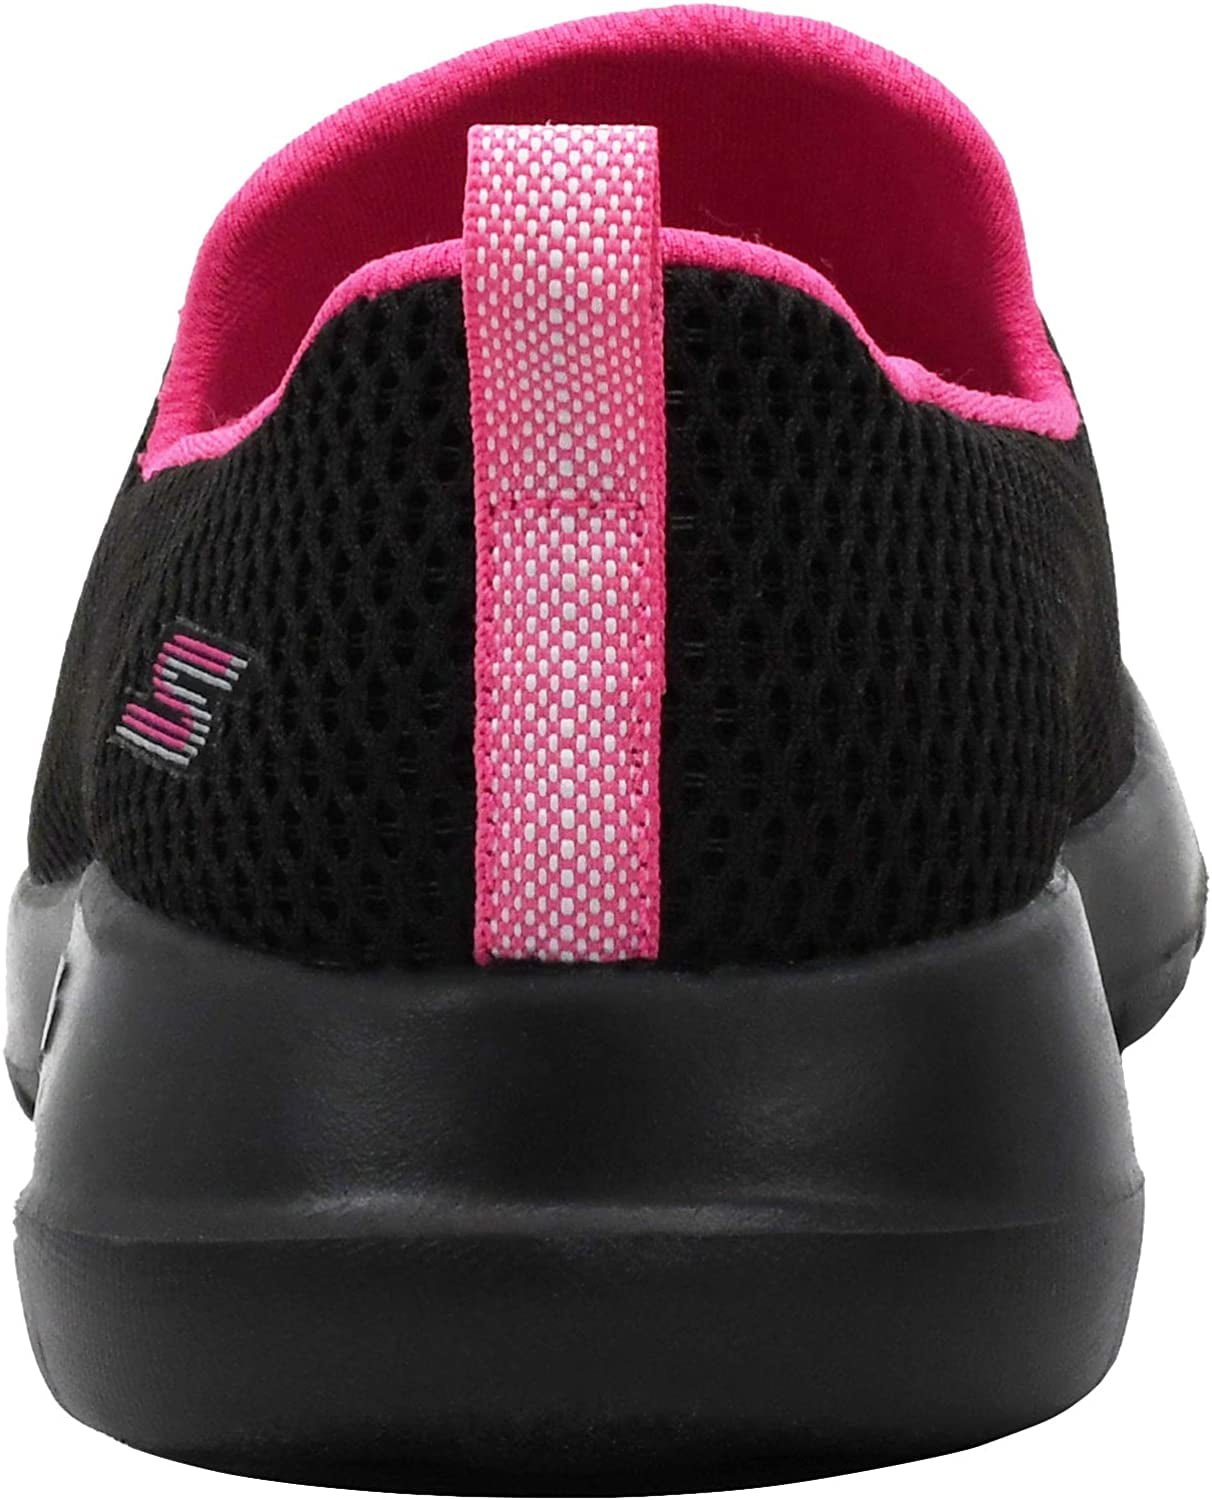 Skechers Women's Go Walk Joy Black/Hot Pink Sneaker 8.5 US - Walmart.com